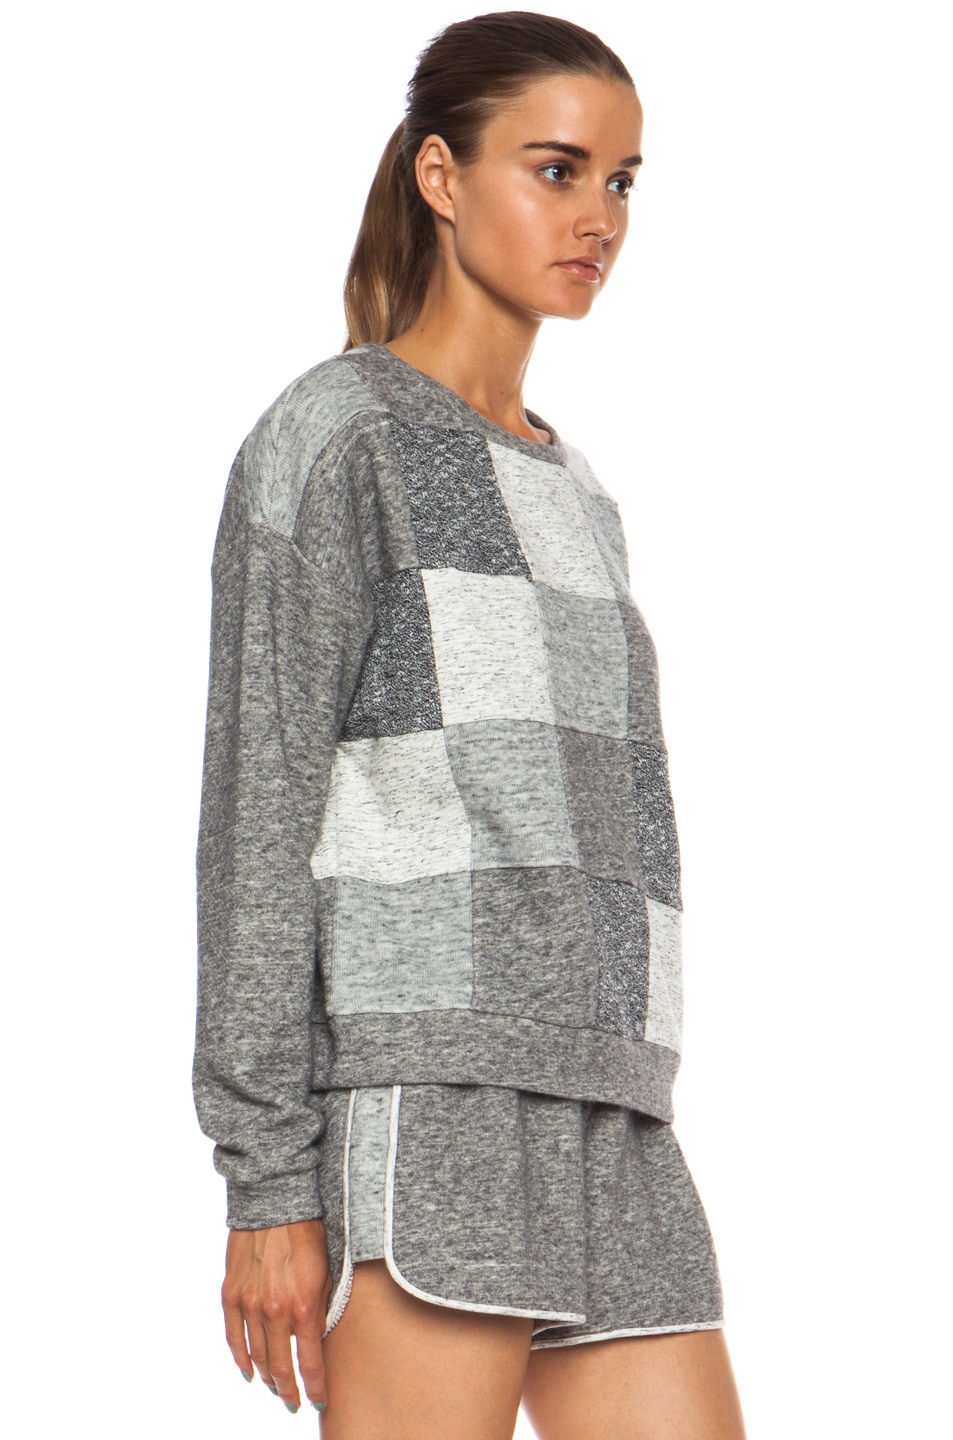 DEREK LAM 10 CROSBY Cotton-Blend Sweatshirt in Grey Combo | FWRD